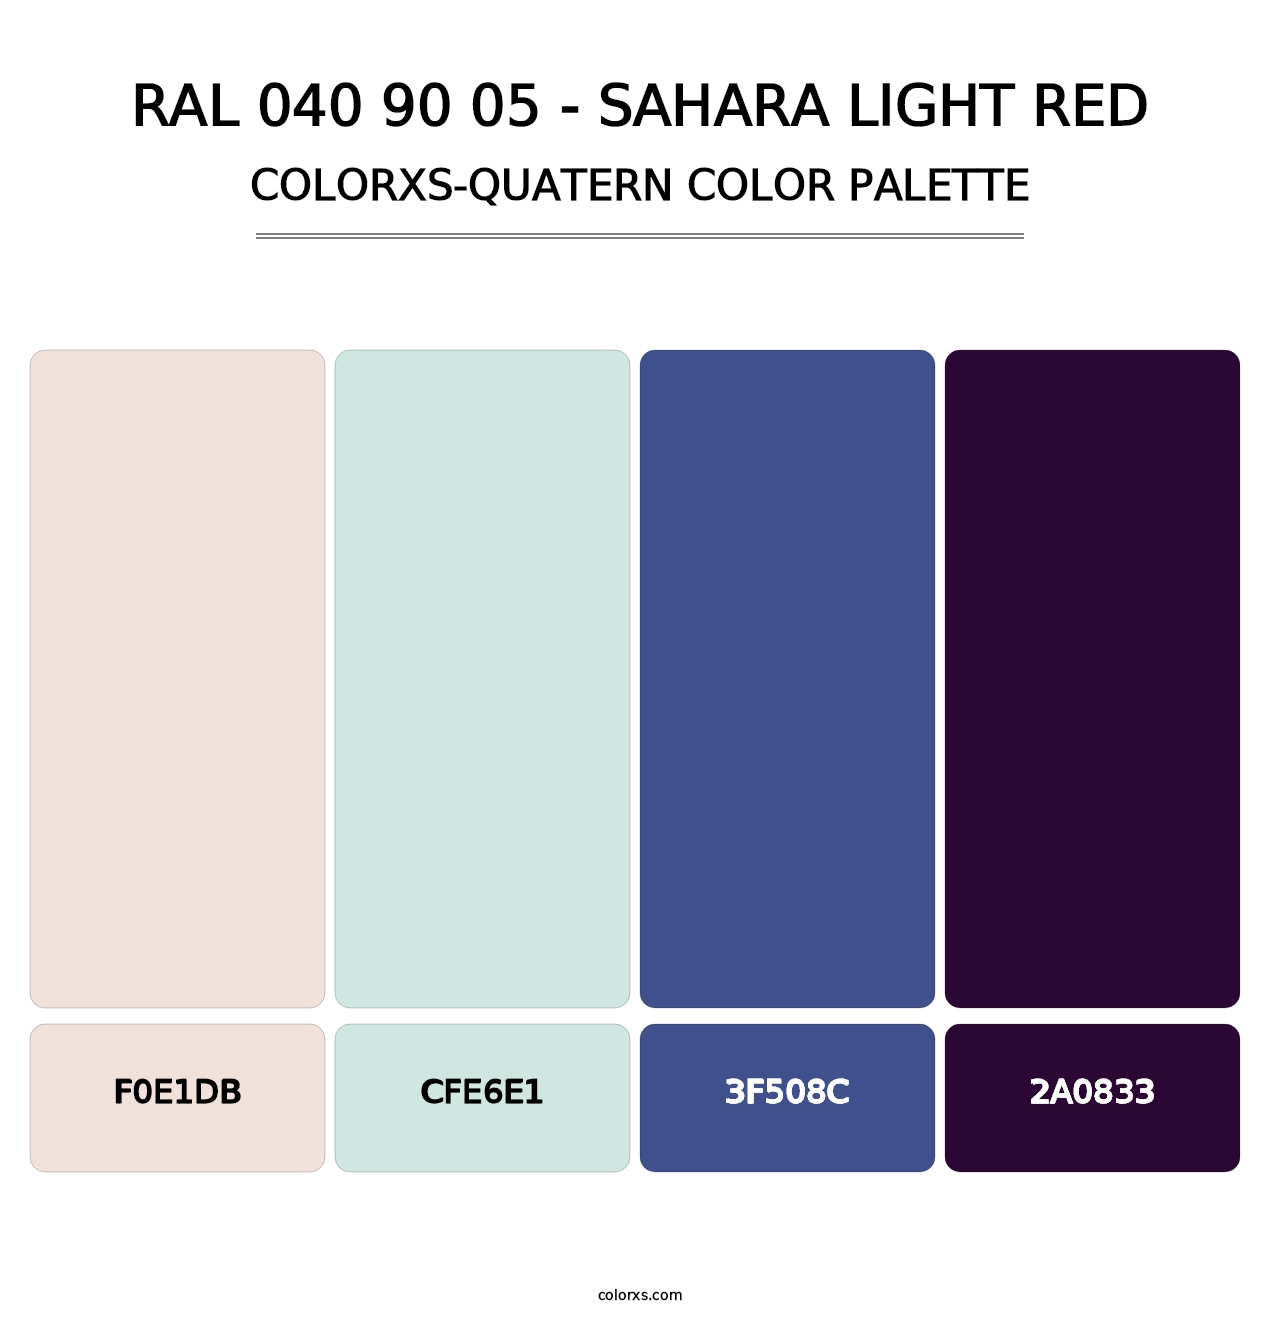 RAL 040 90 05 - Sahara Light Red - Colorxs Quatern Palette